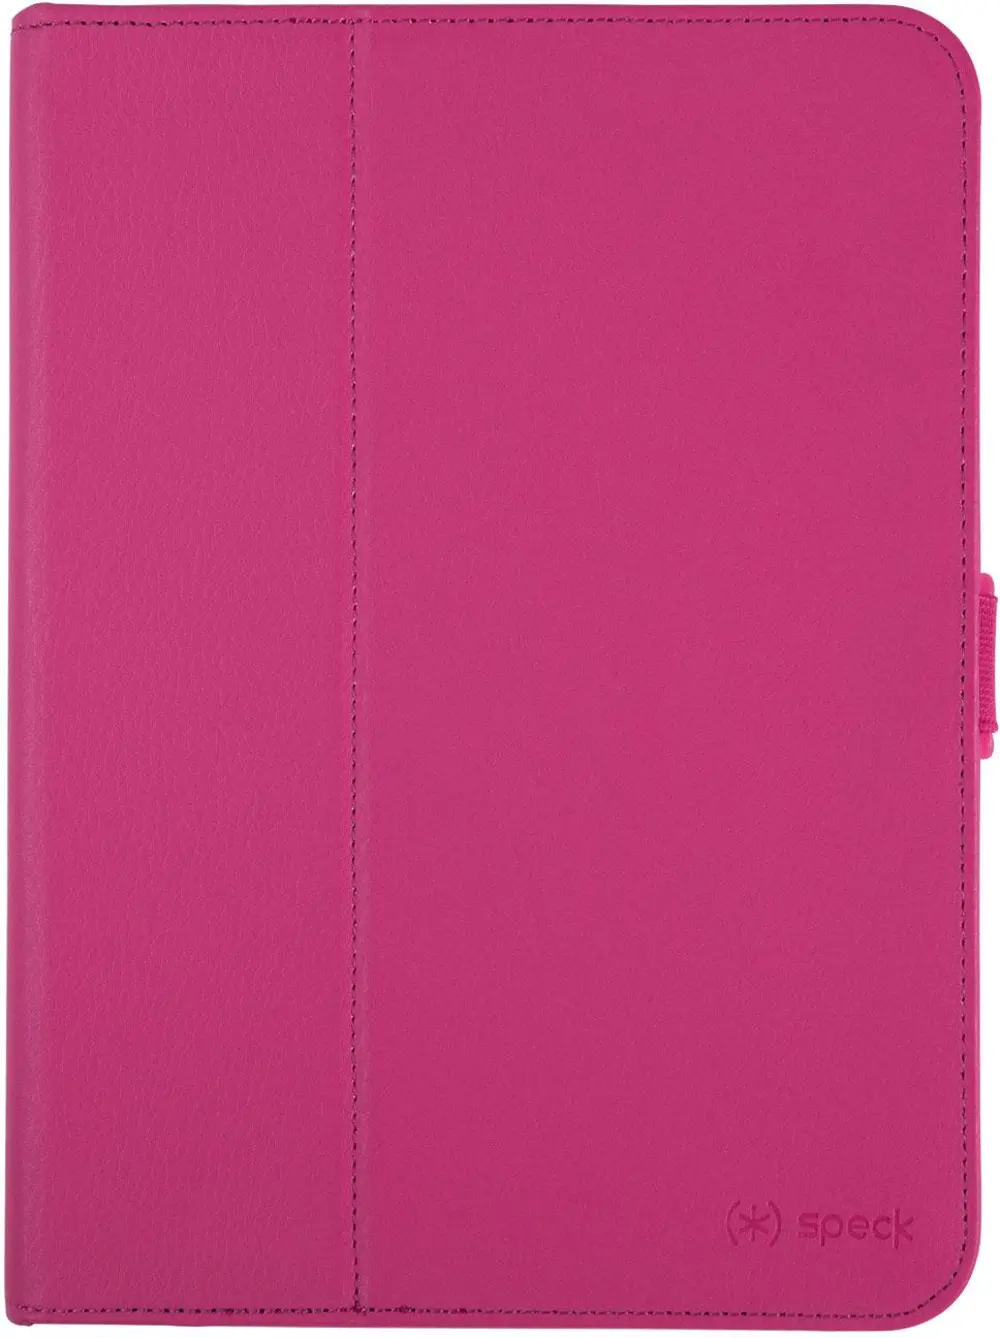 Speck FitFolio for Samsung Galaxy Tab 3 10.1 - Raspberry Pink-1